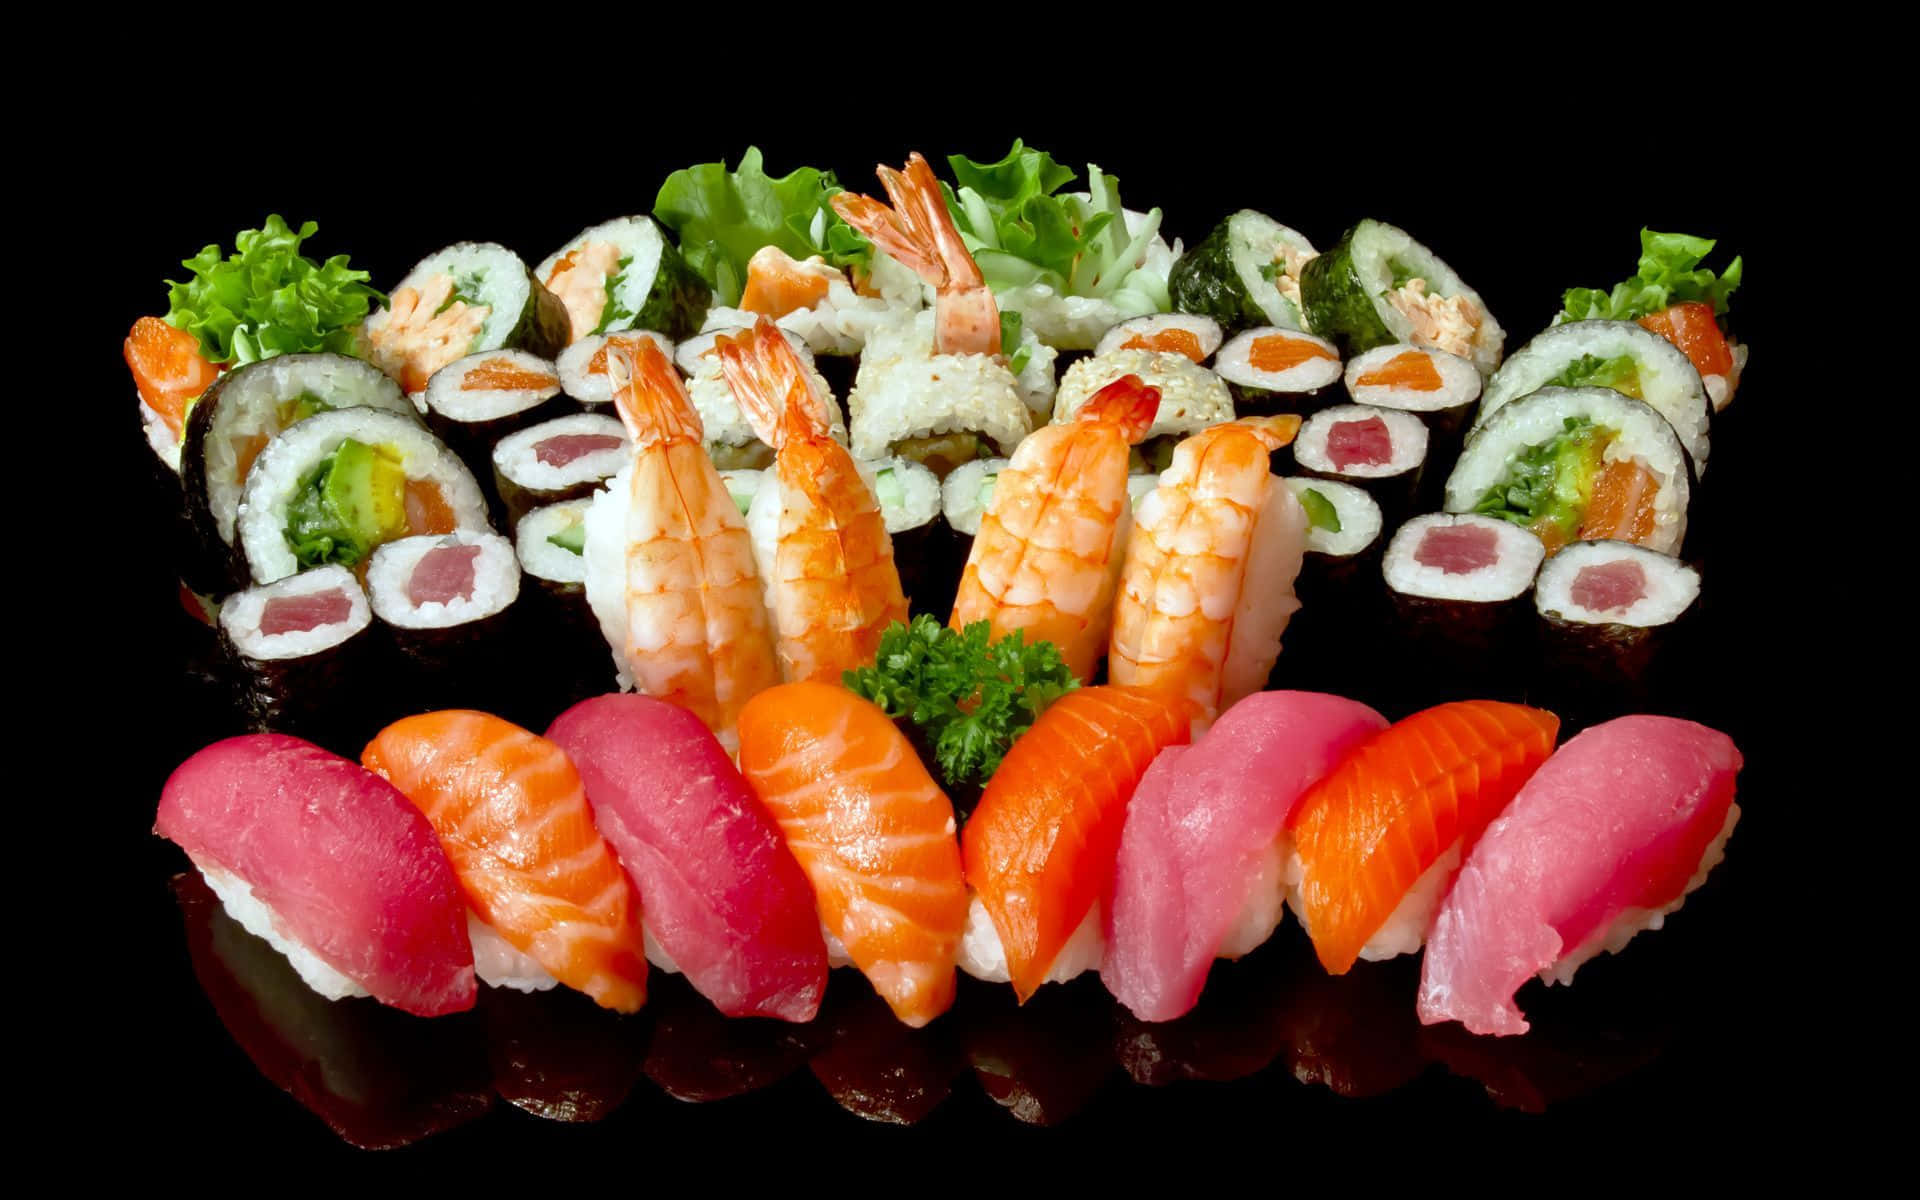 Caption: Vibrant Variety of Sushi Platter